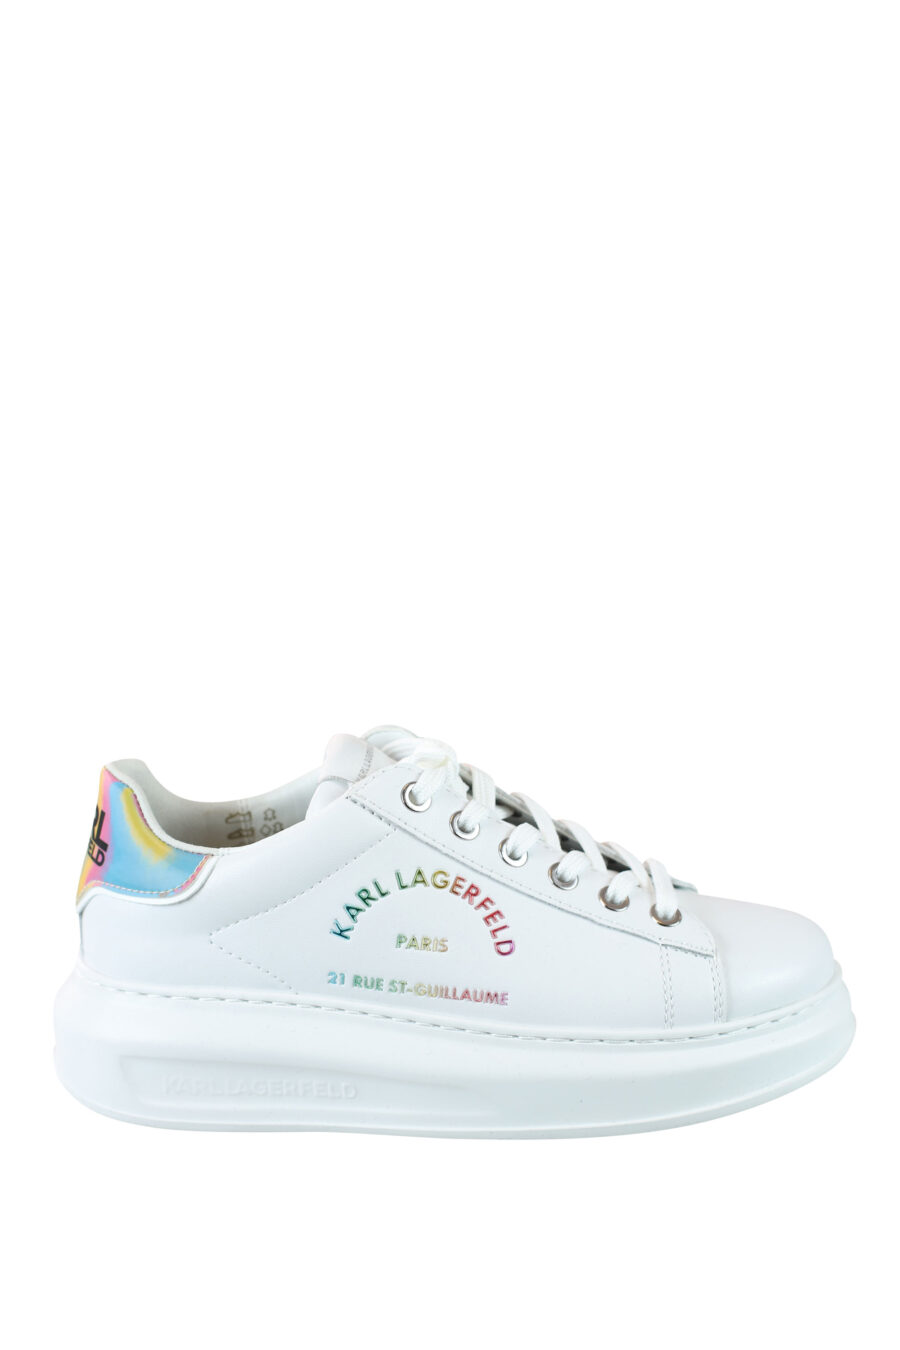 Zapatillas blancas con logo multicolor "rue st-guillaume" - IMG 0009